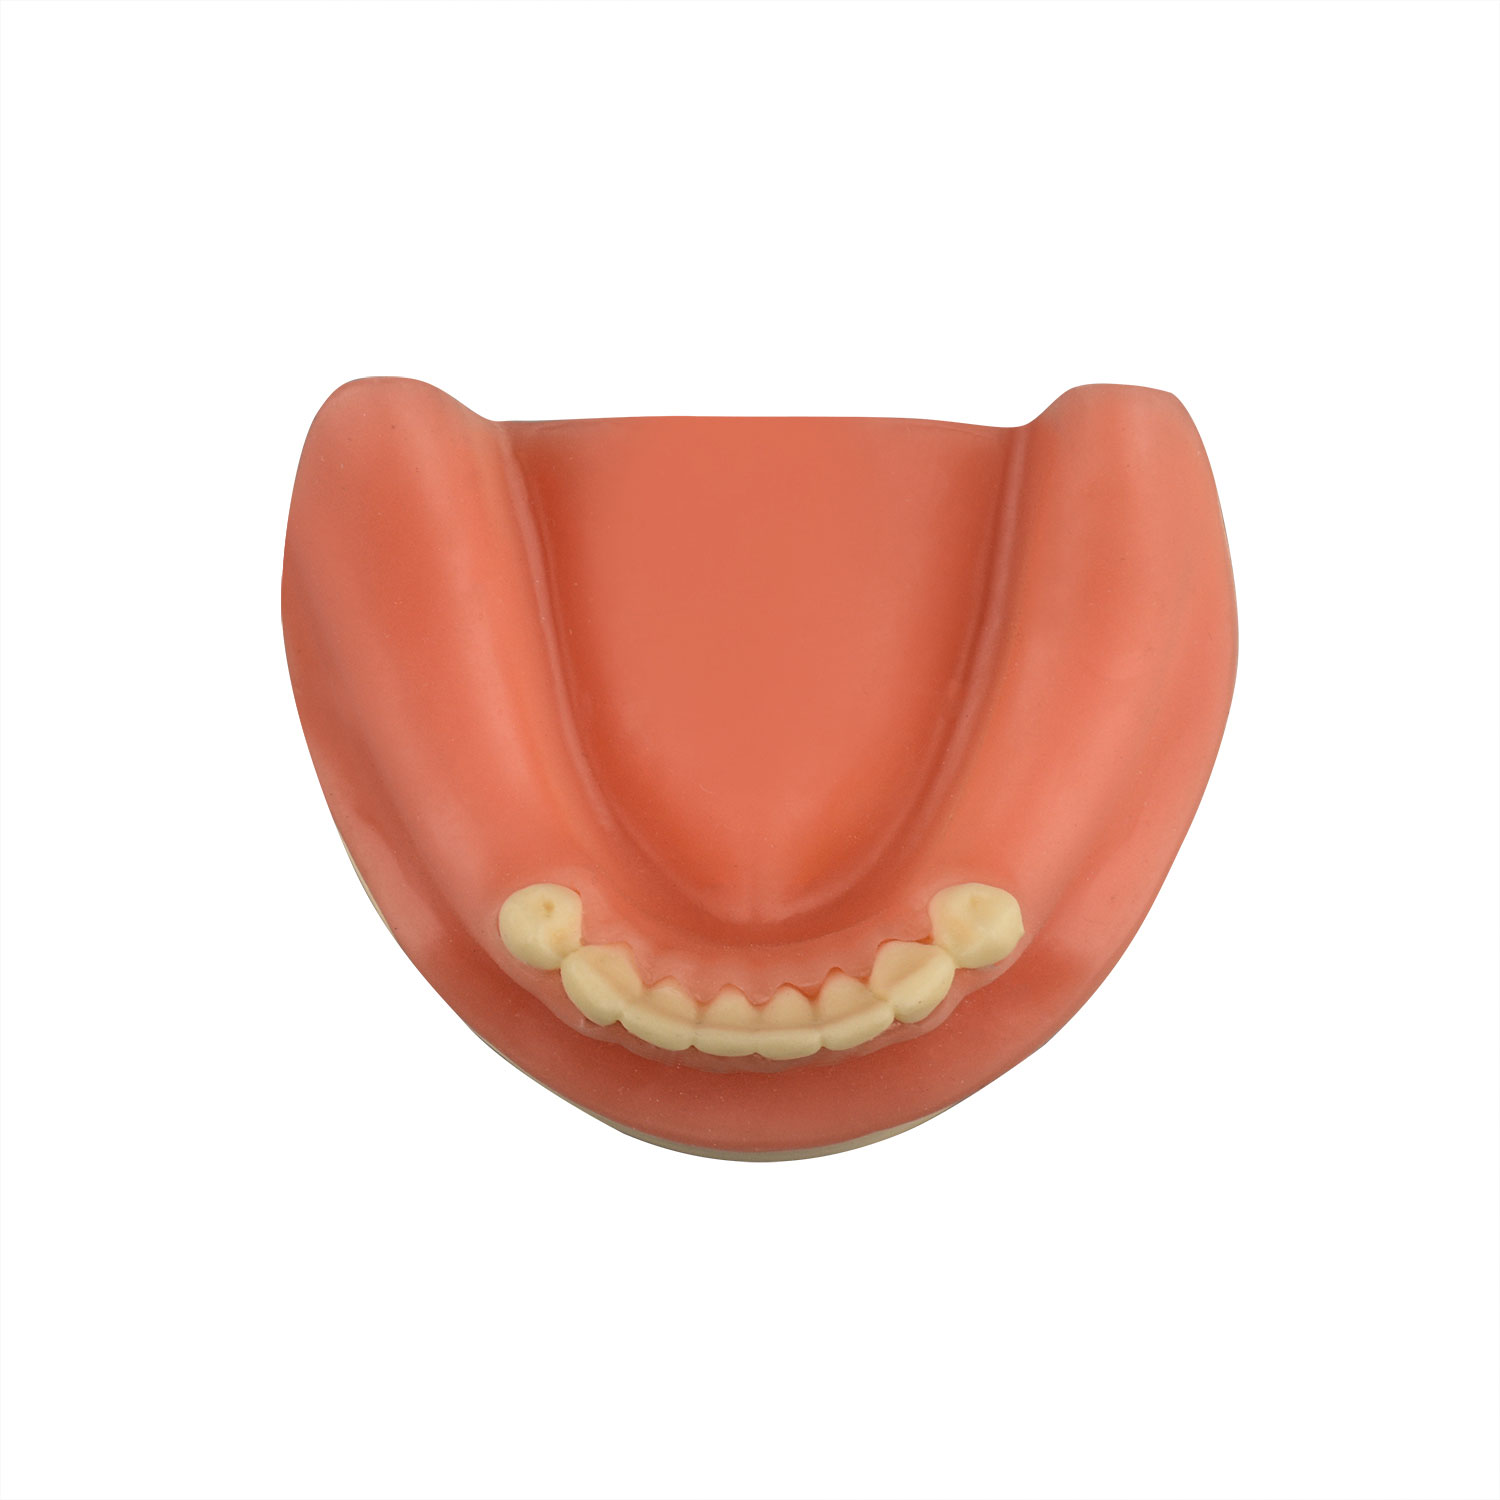 Dental Implant Training Lower Jaw Model